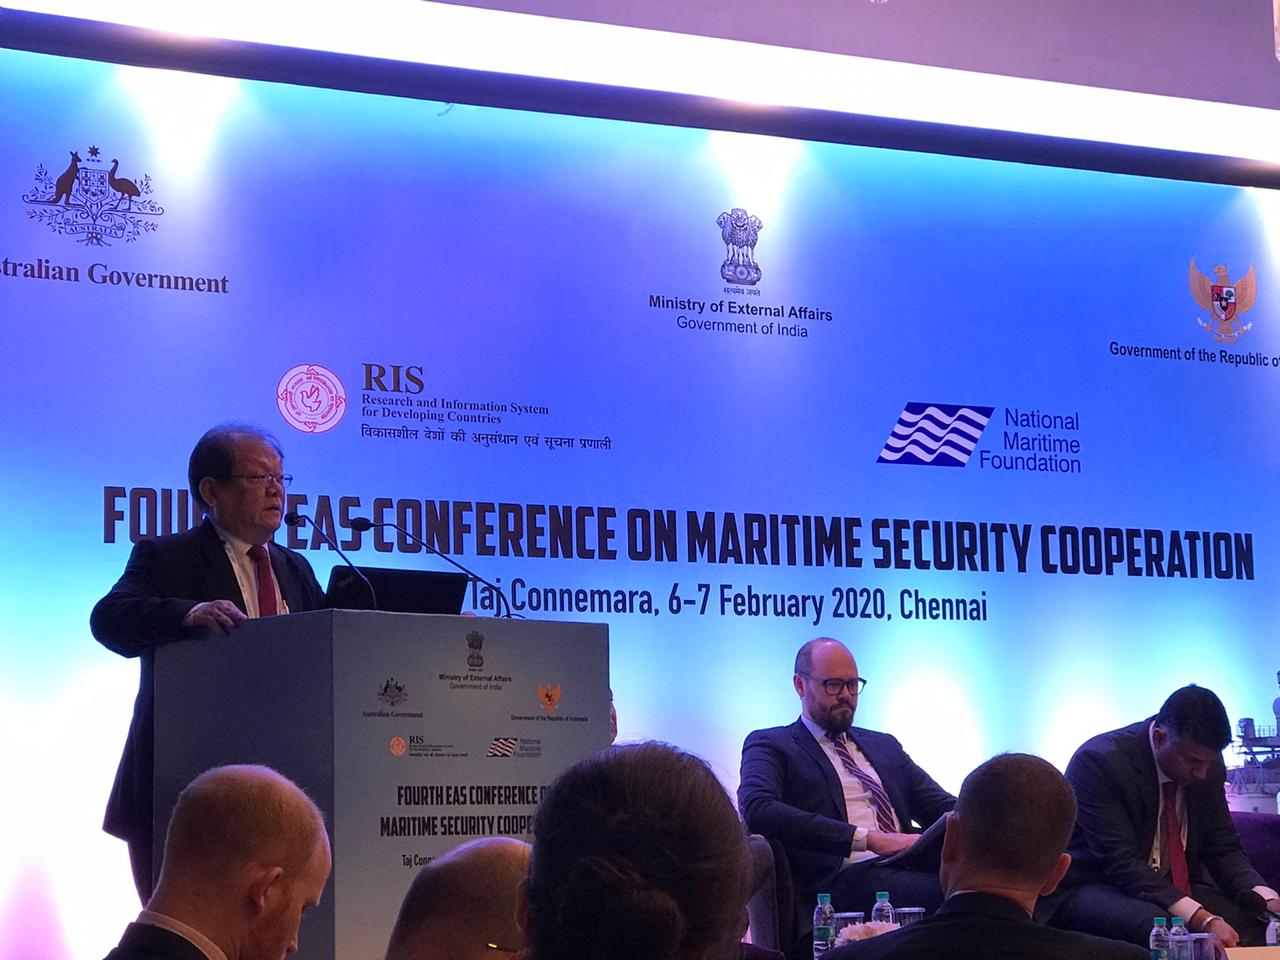 Foster Gultom, Ketua Delri pada pertemuan the 4th East Asia Summit (EAS) Conference on Maritime Security Cooperation di Chennai, India. (Foto: kemlu) 